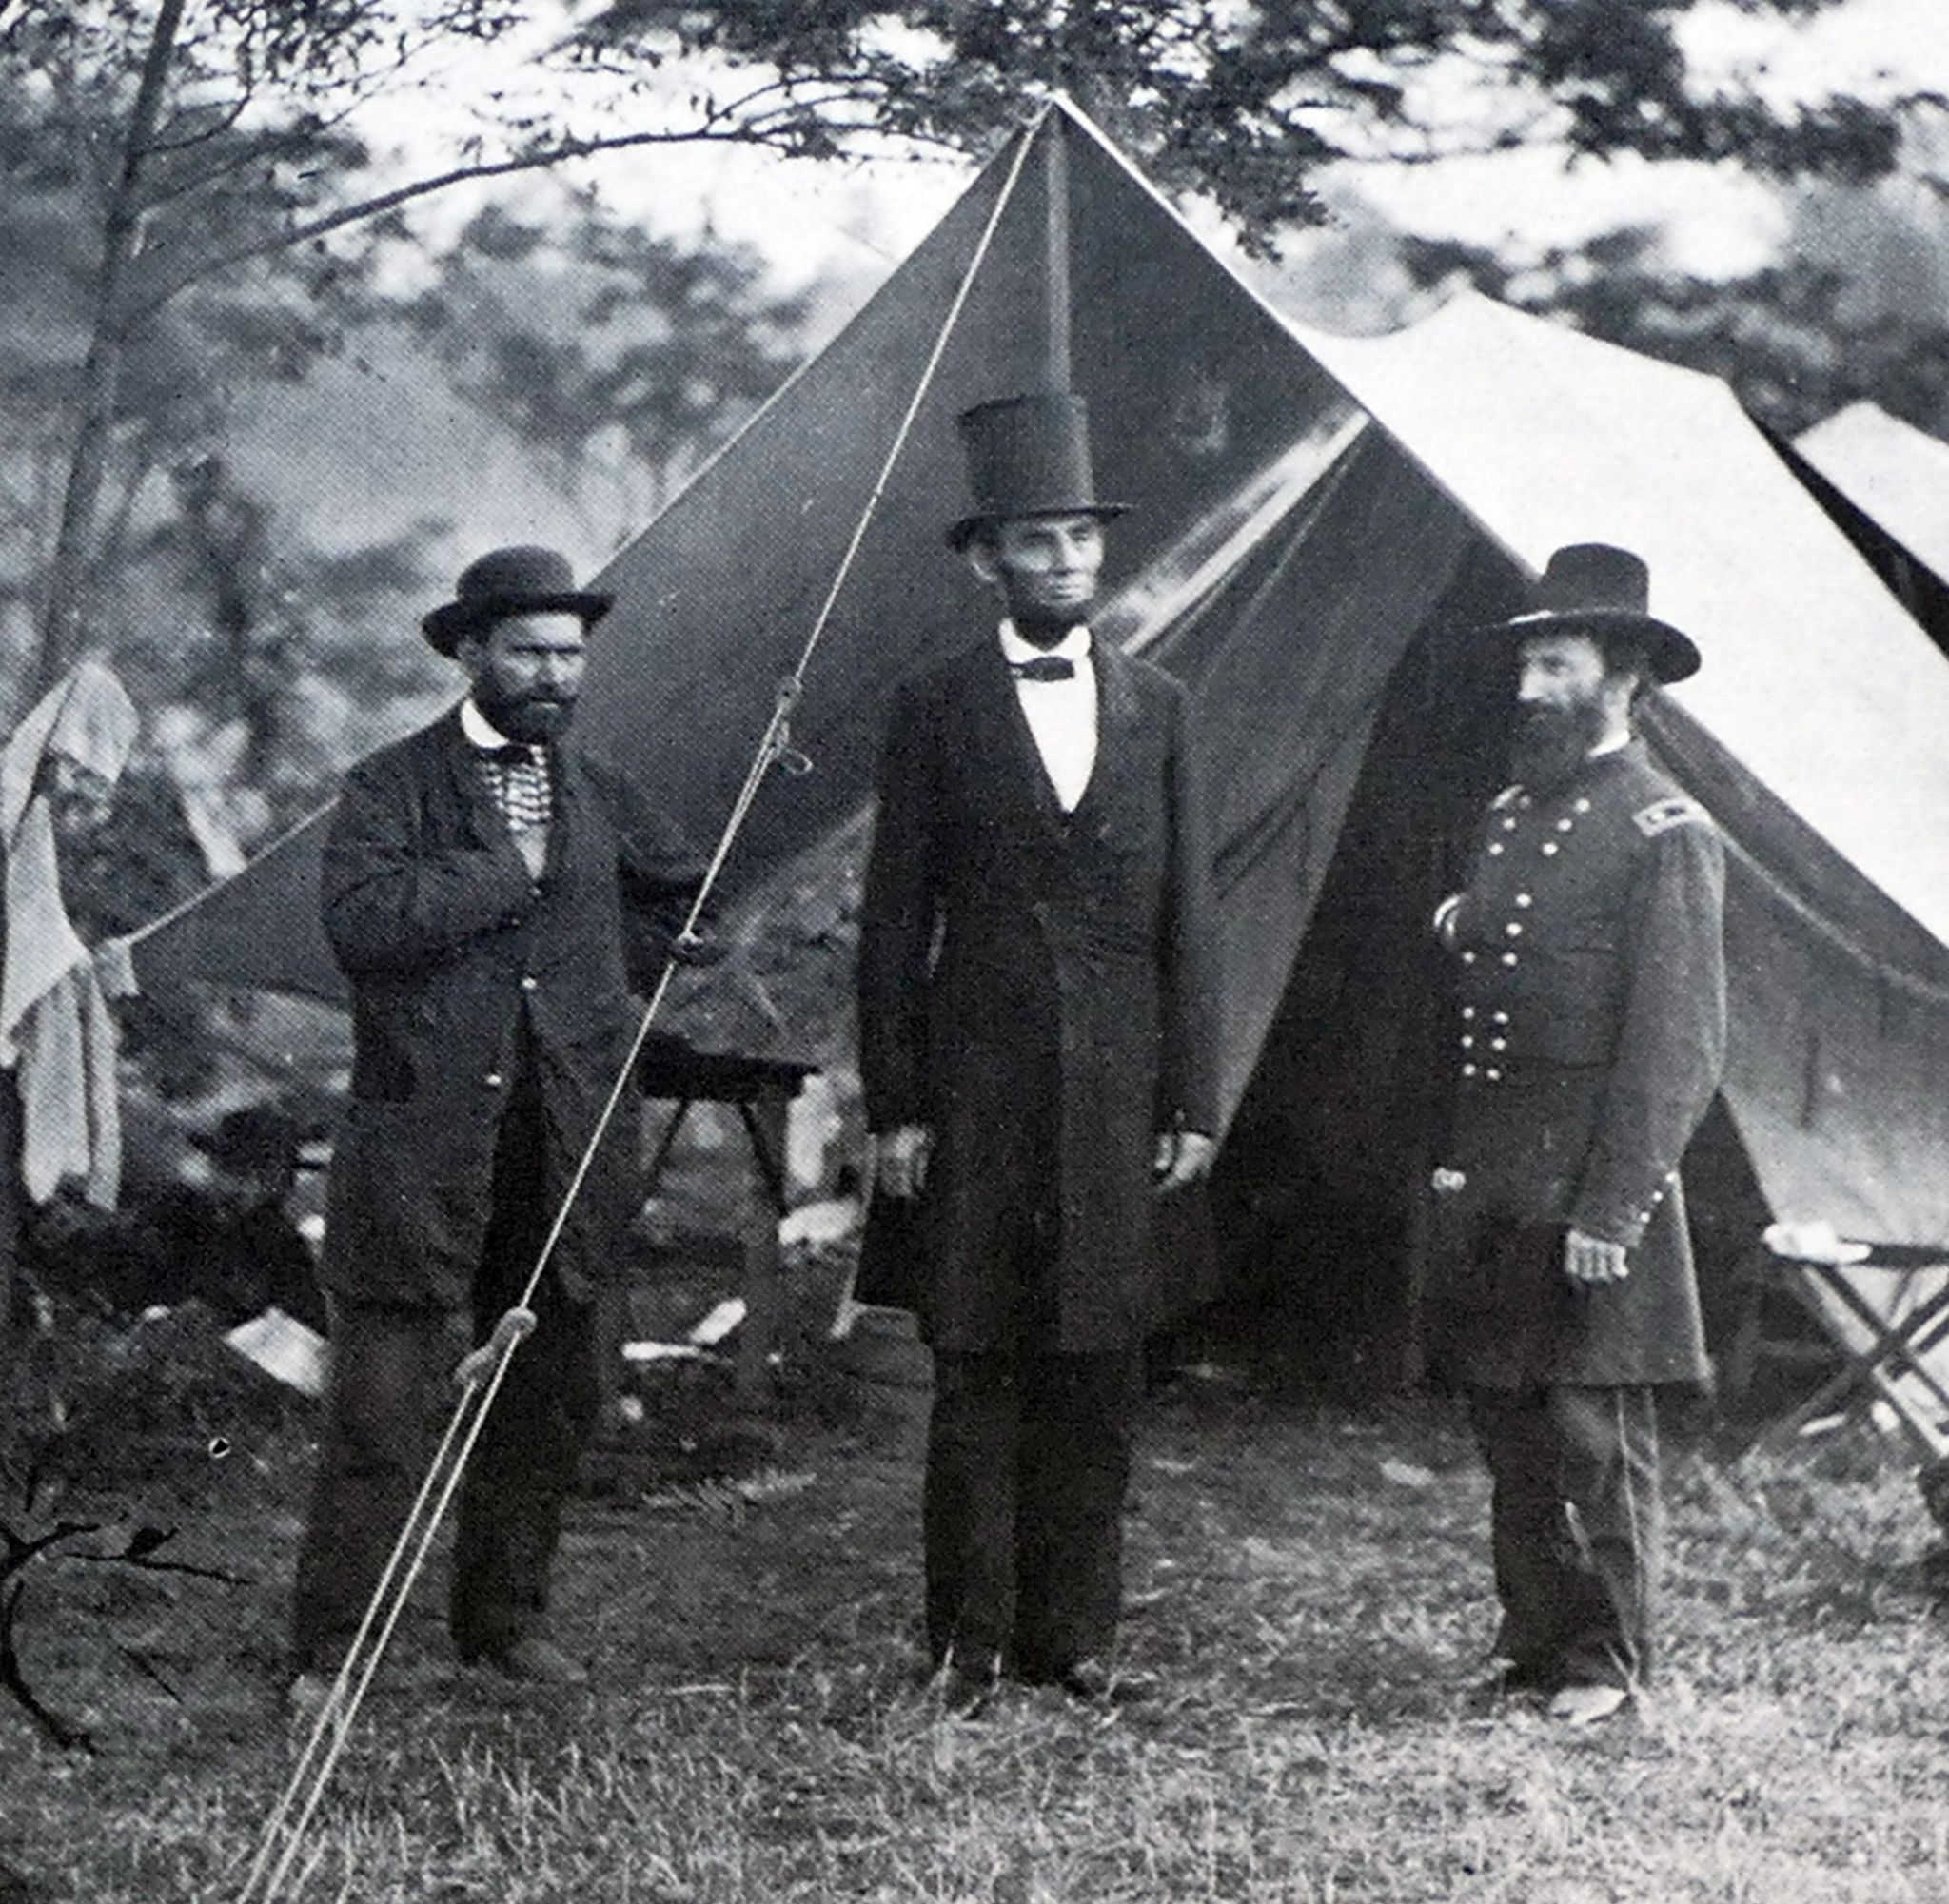 Photos of the American Civil War